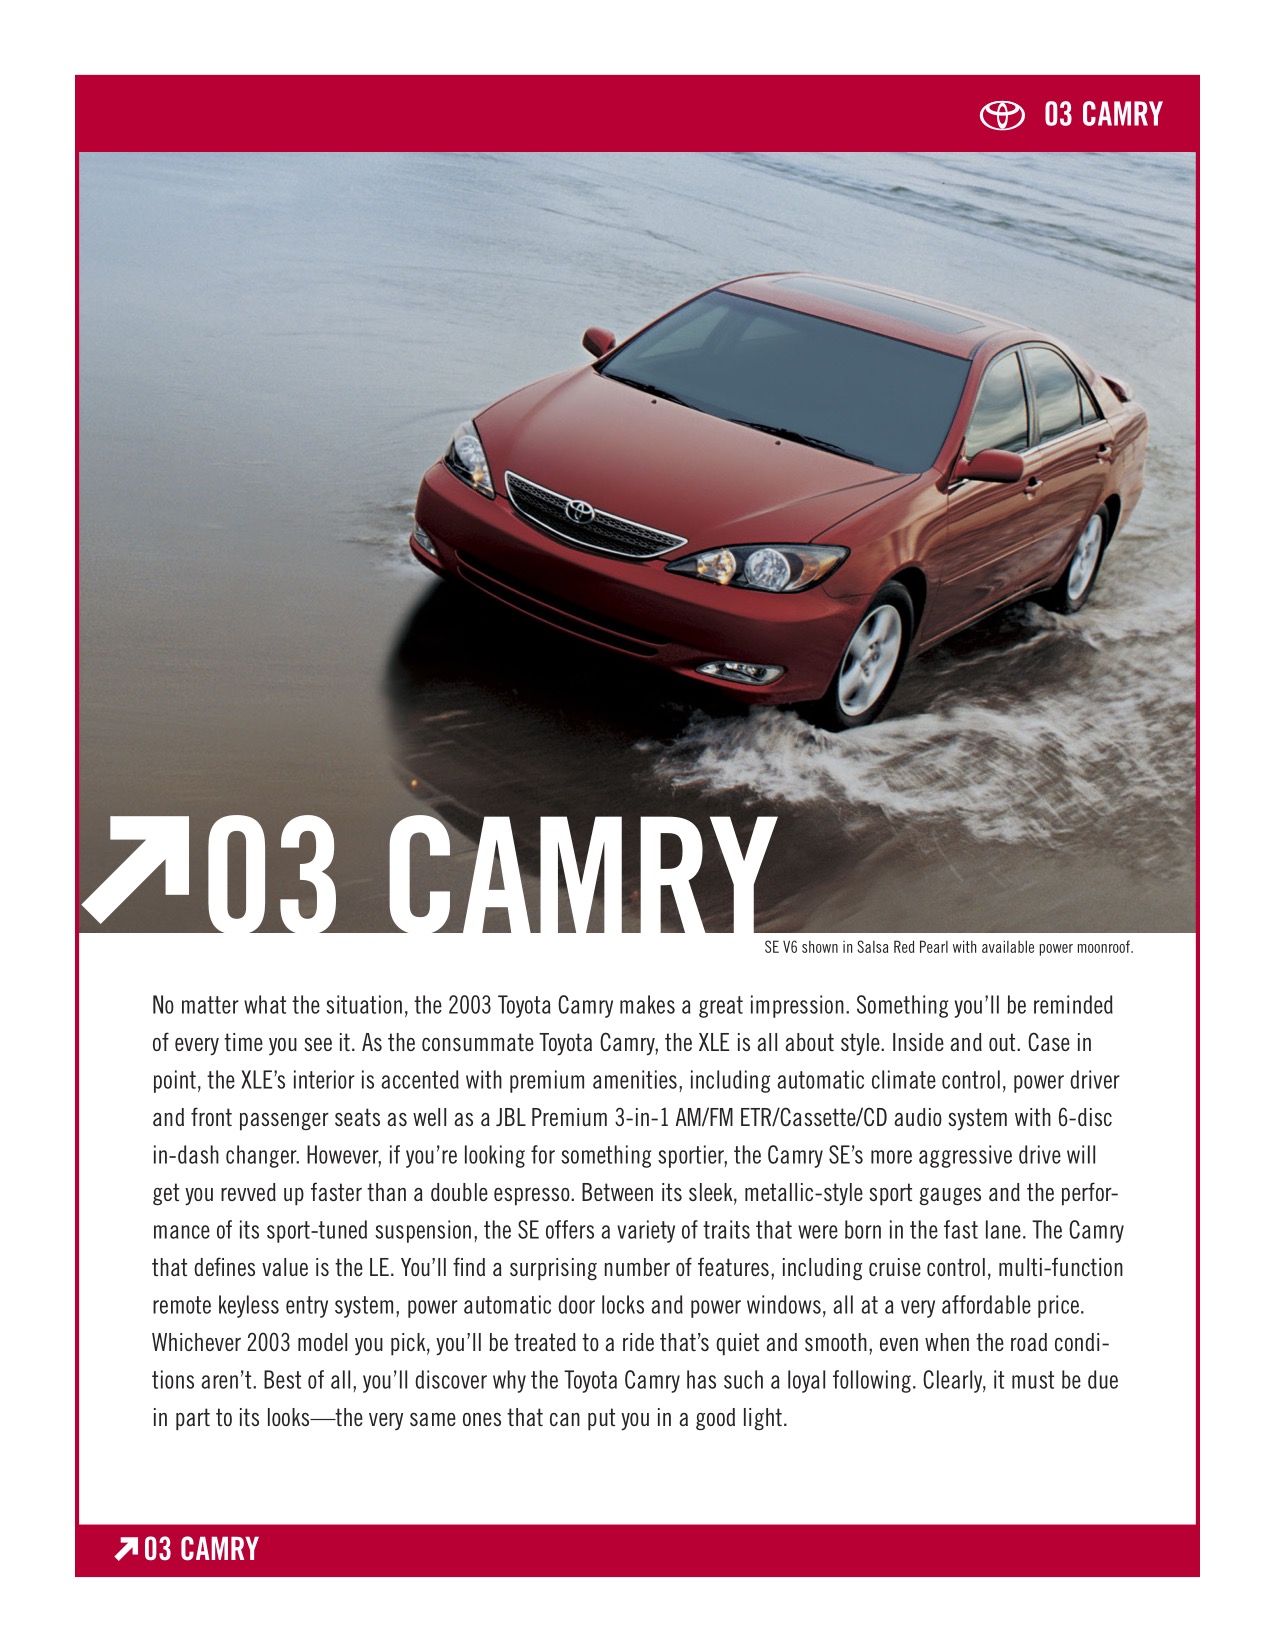 2003 Toyota Camry Brochure